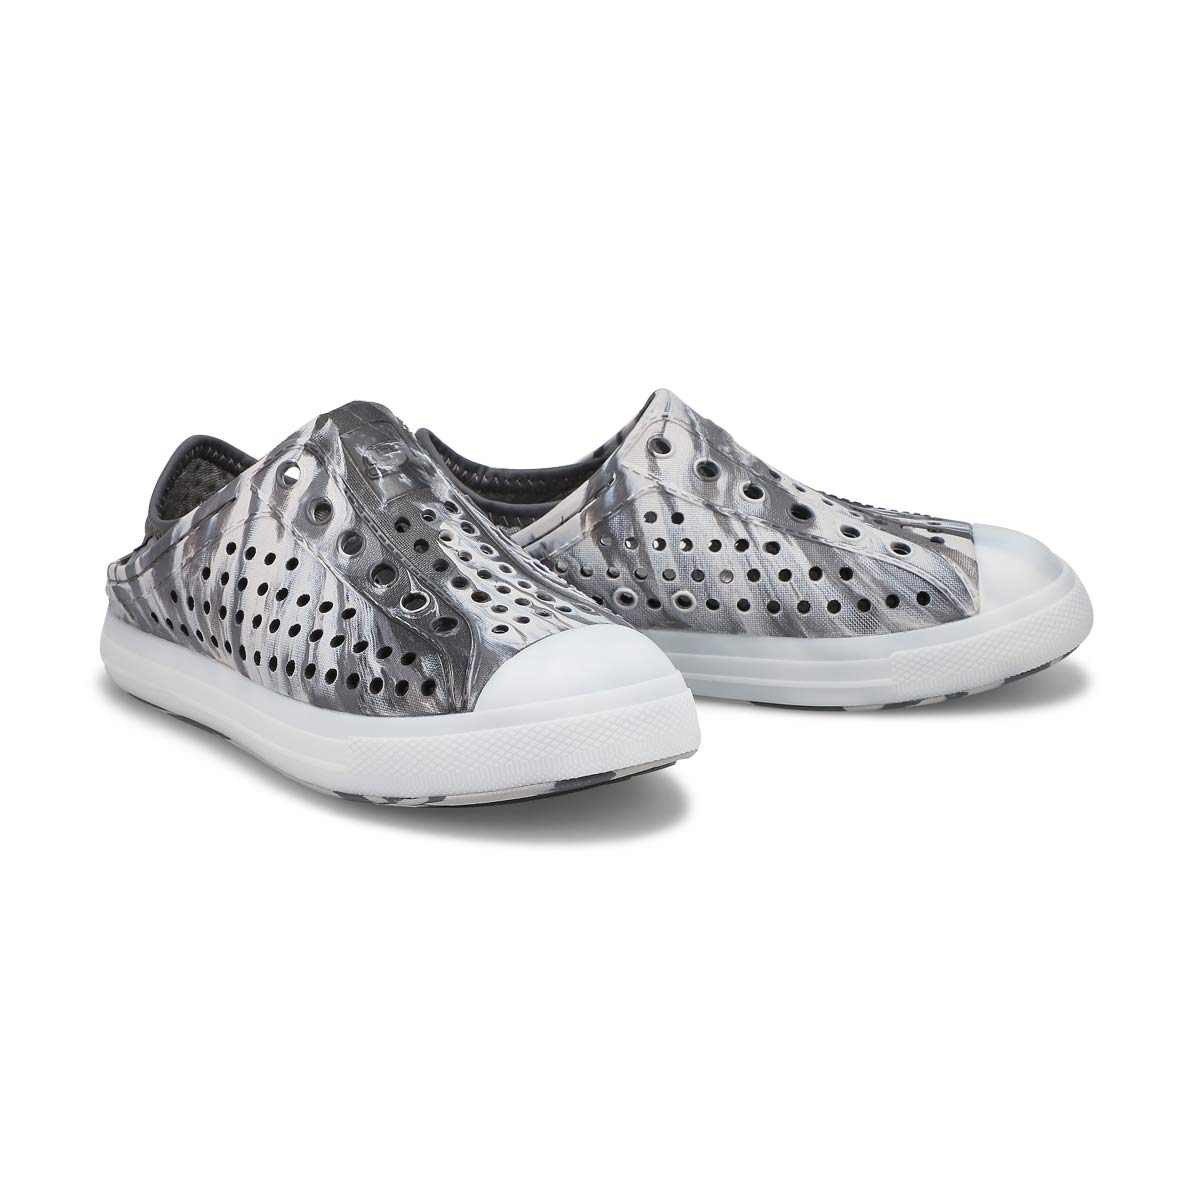 Boys' Guzman Flash Slip On Sneaker - Grey